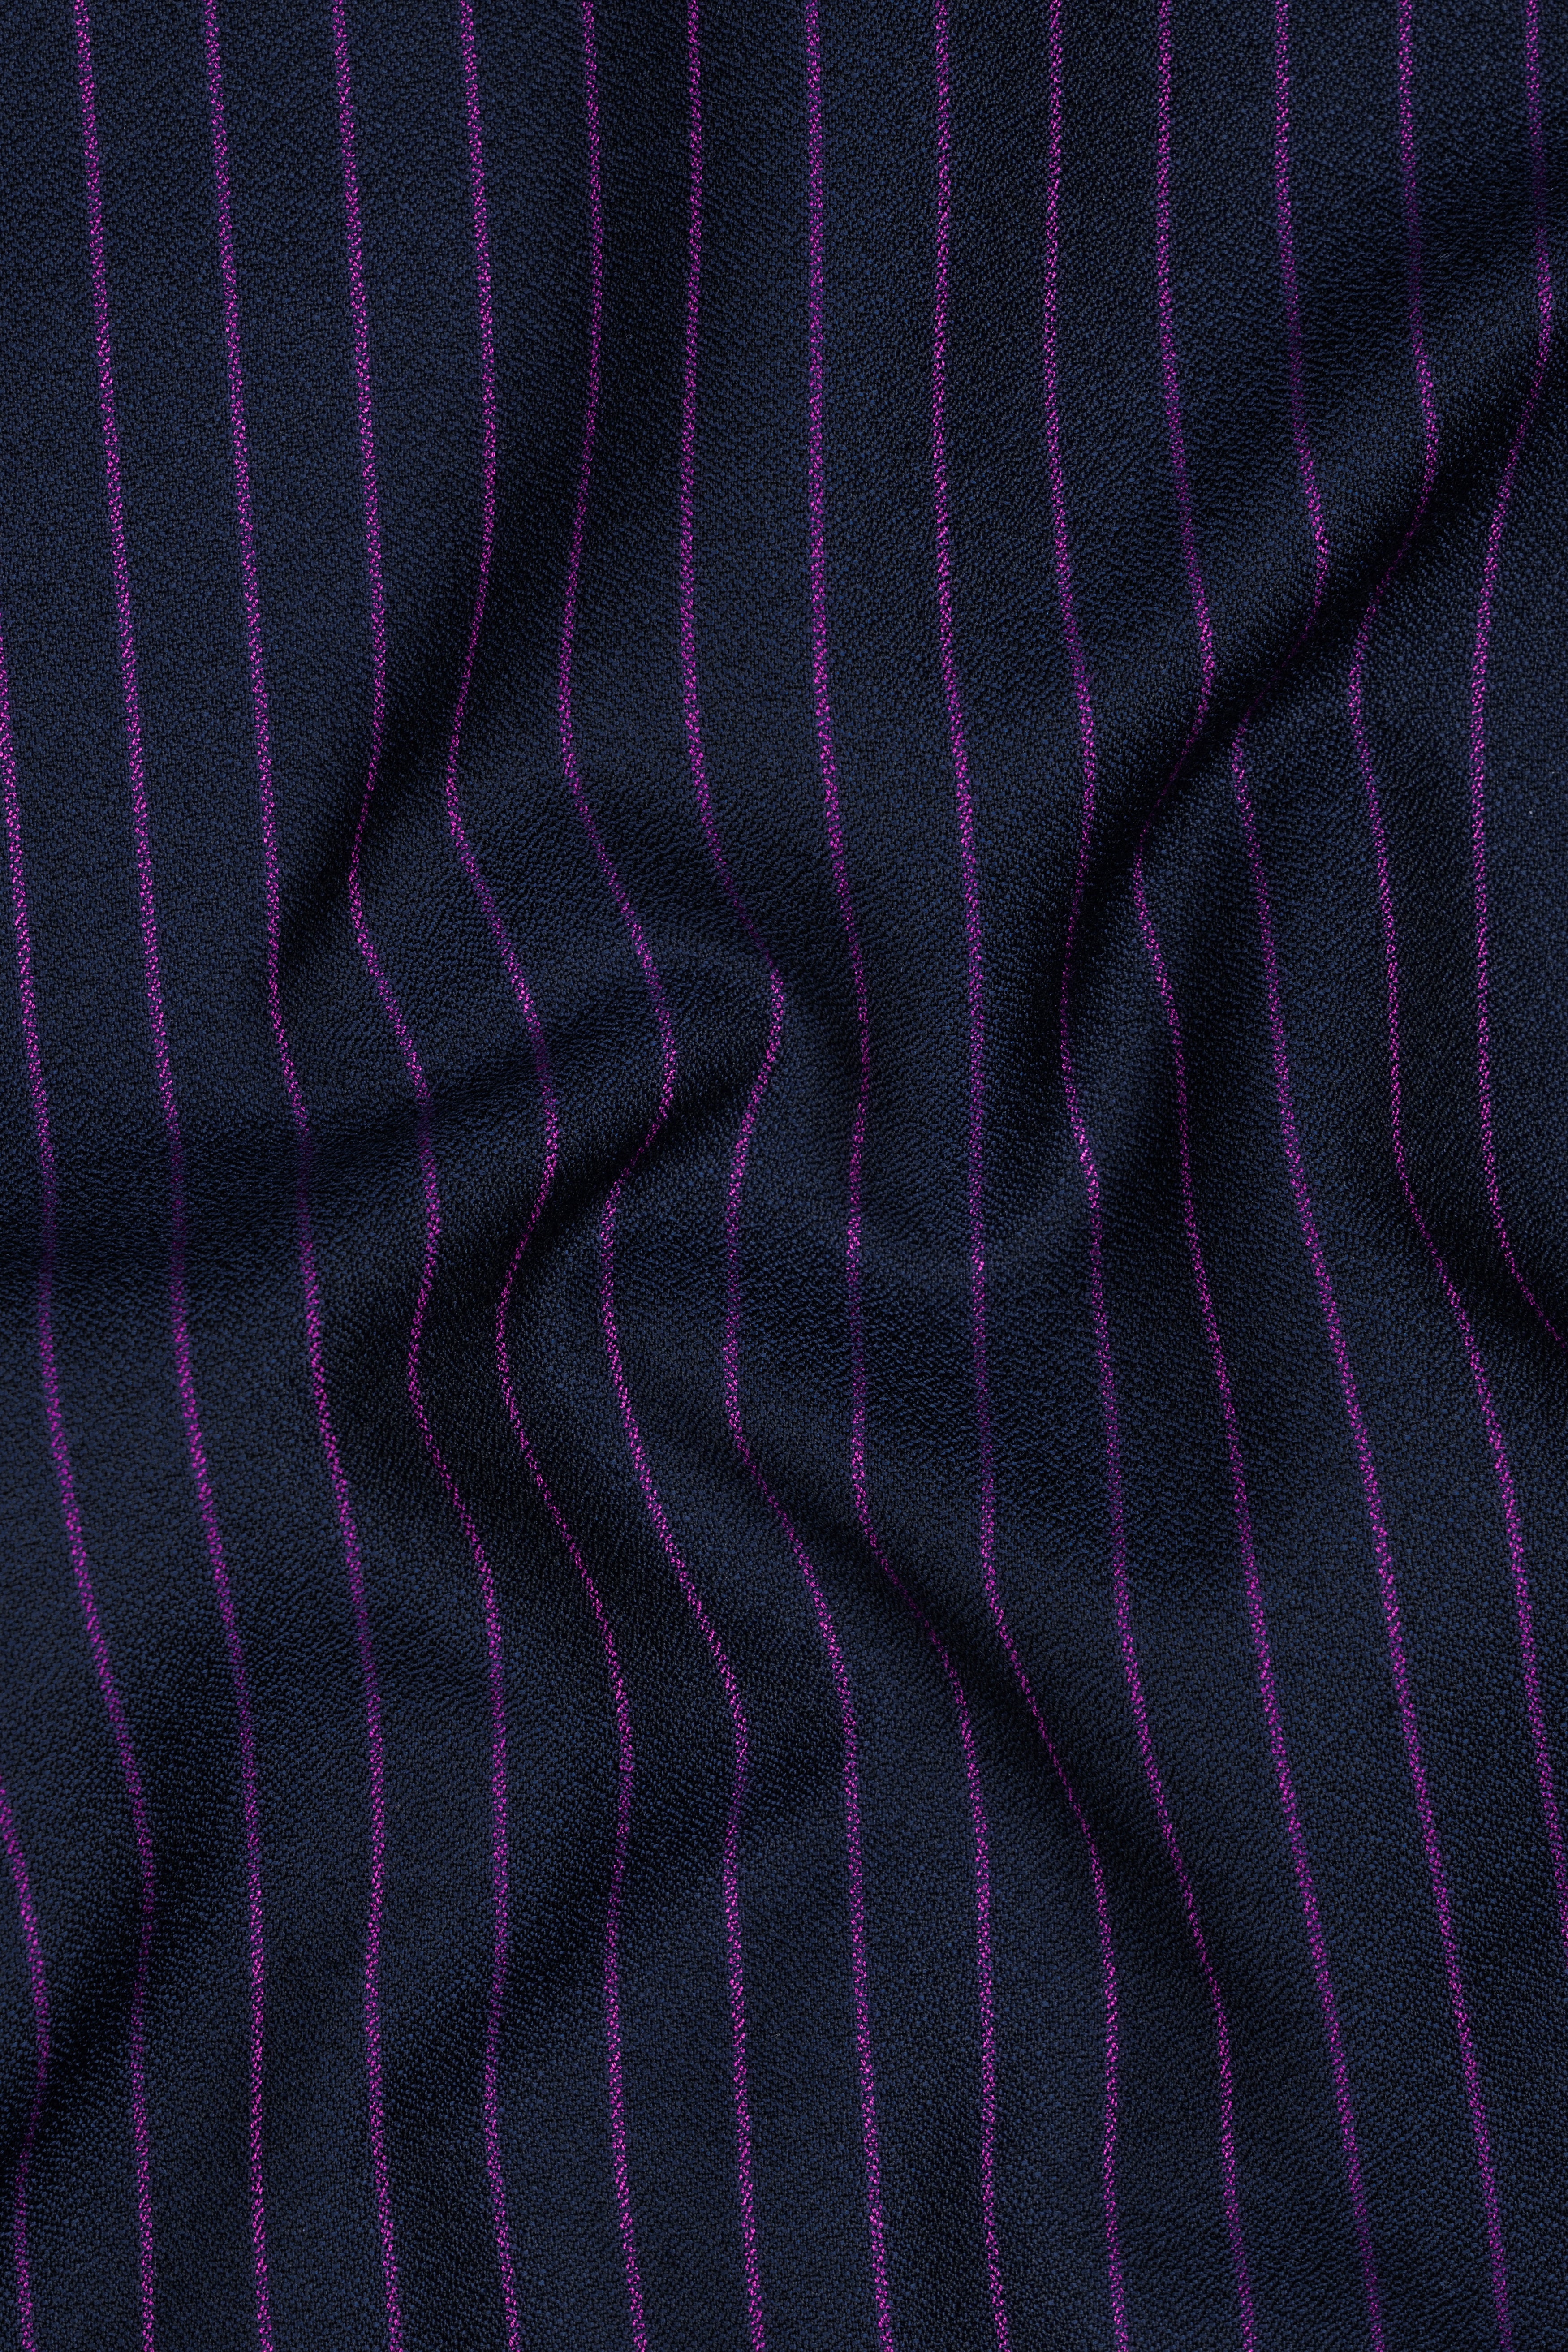 Steel Blue with Grape Purple Striped Wool Blend Pant